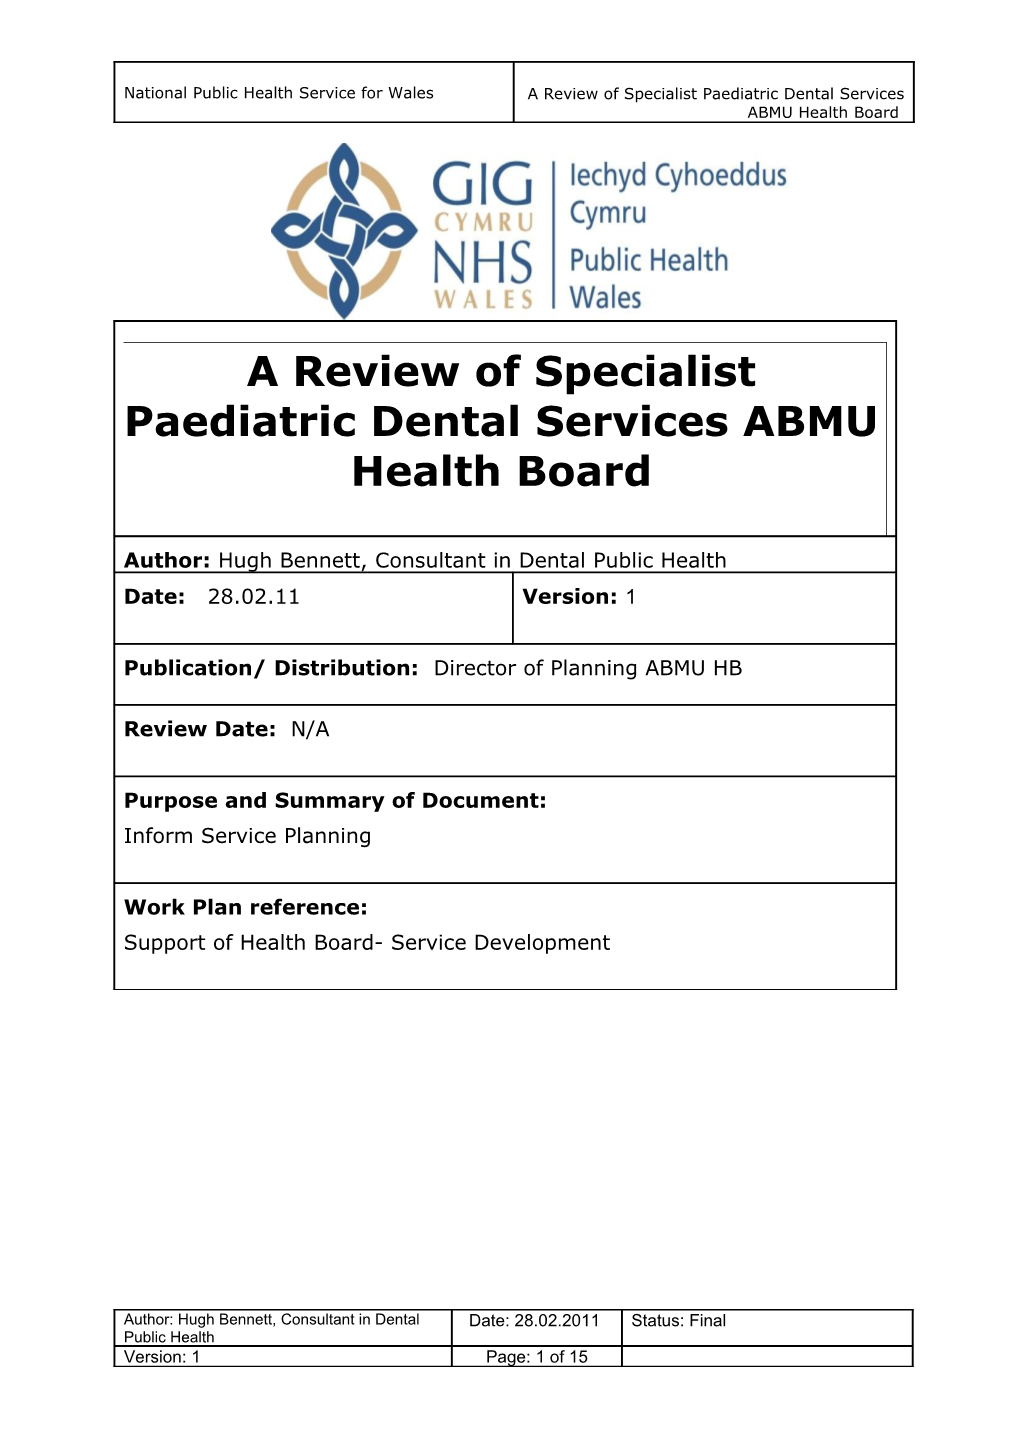 Specialist Paediatric Dentistry